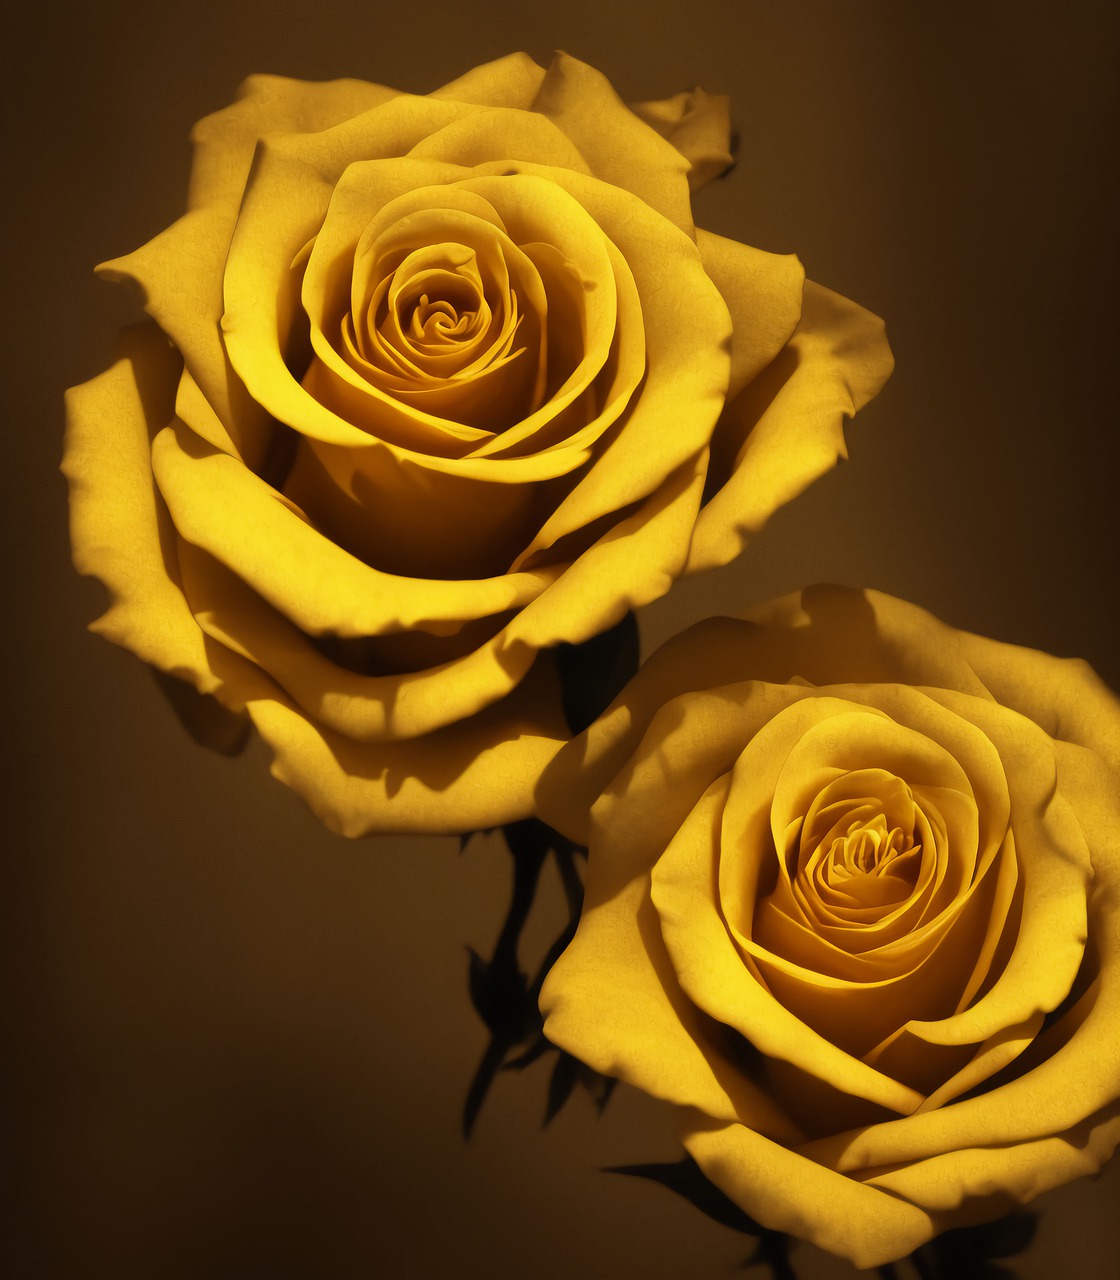 Golden Rose from Archangel Michael